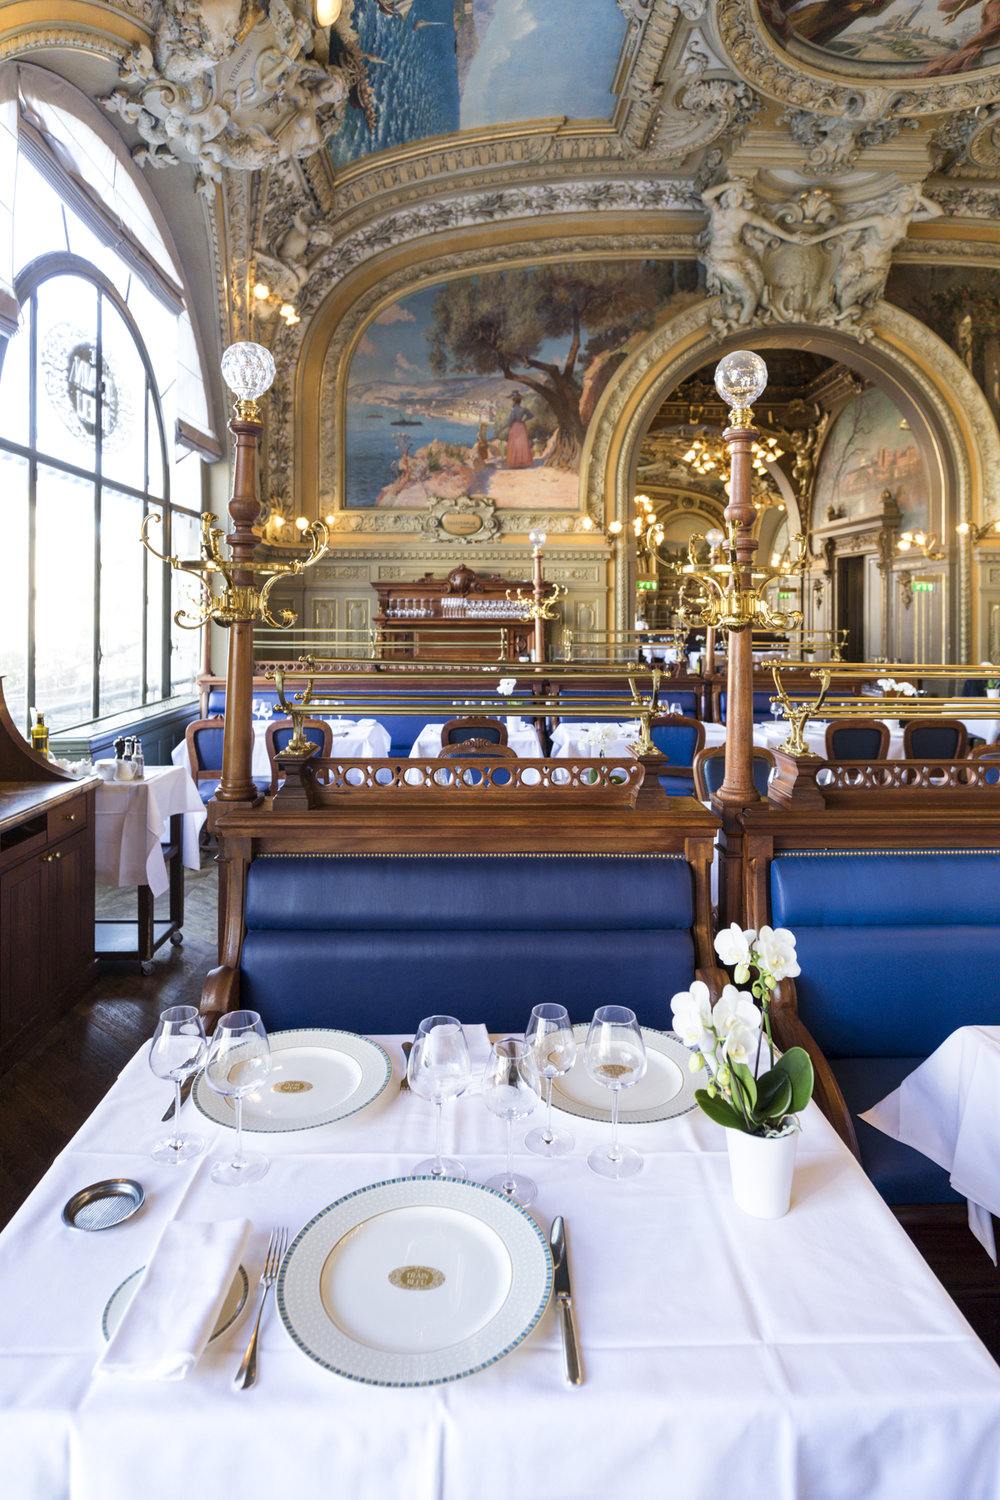 Le Train Bleu, Le Train Bleu is a restaurant located in t…